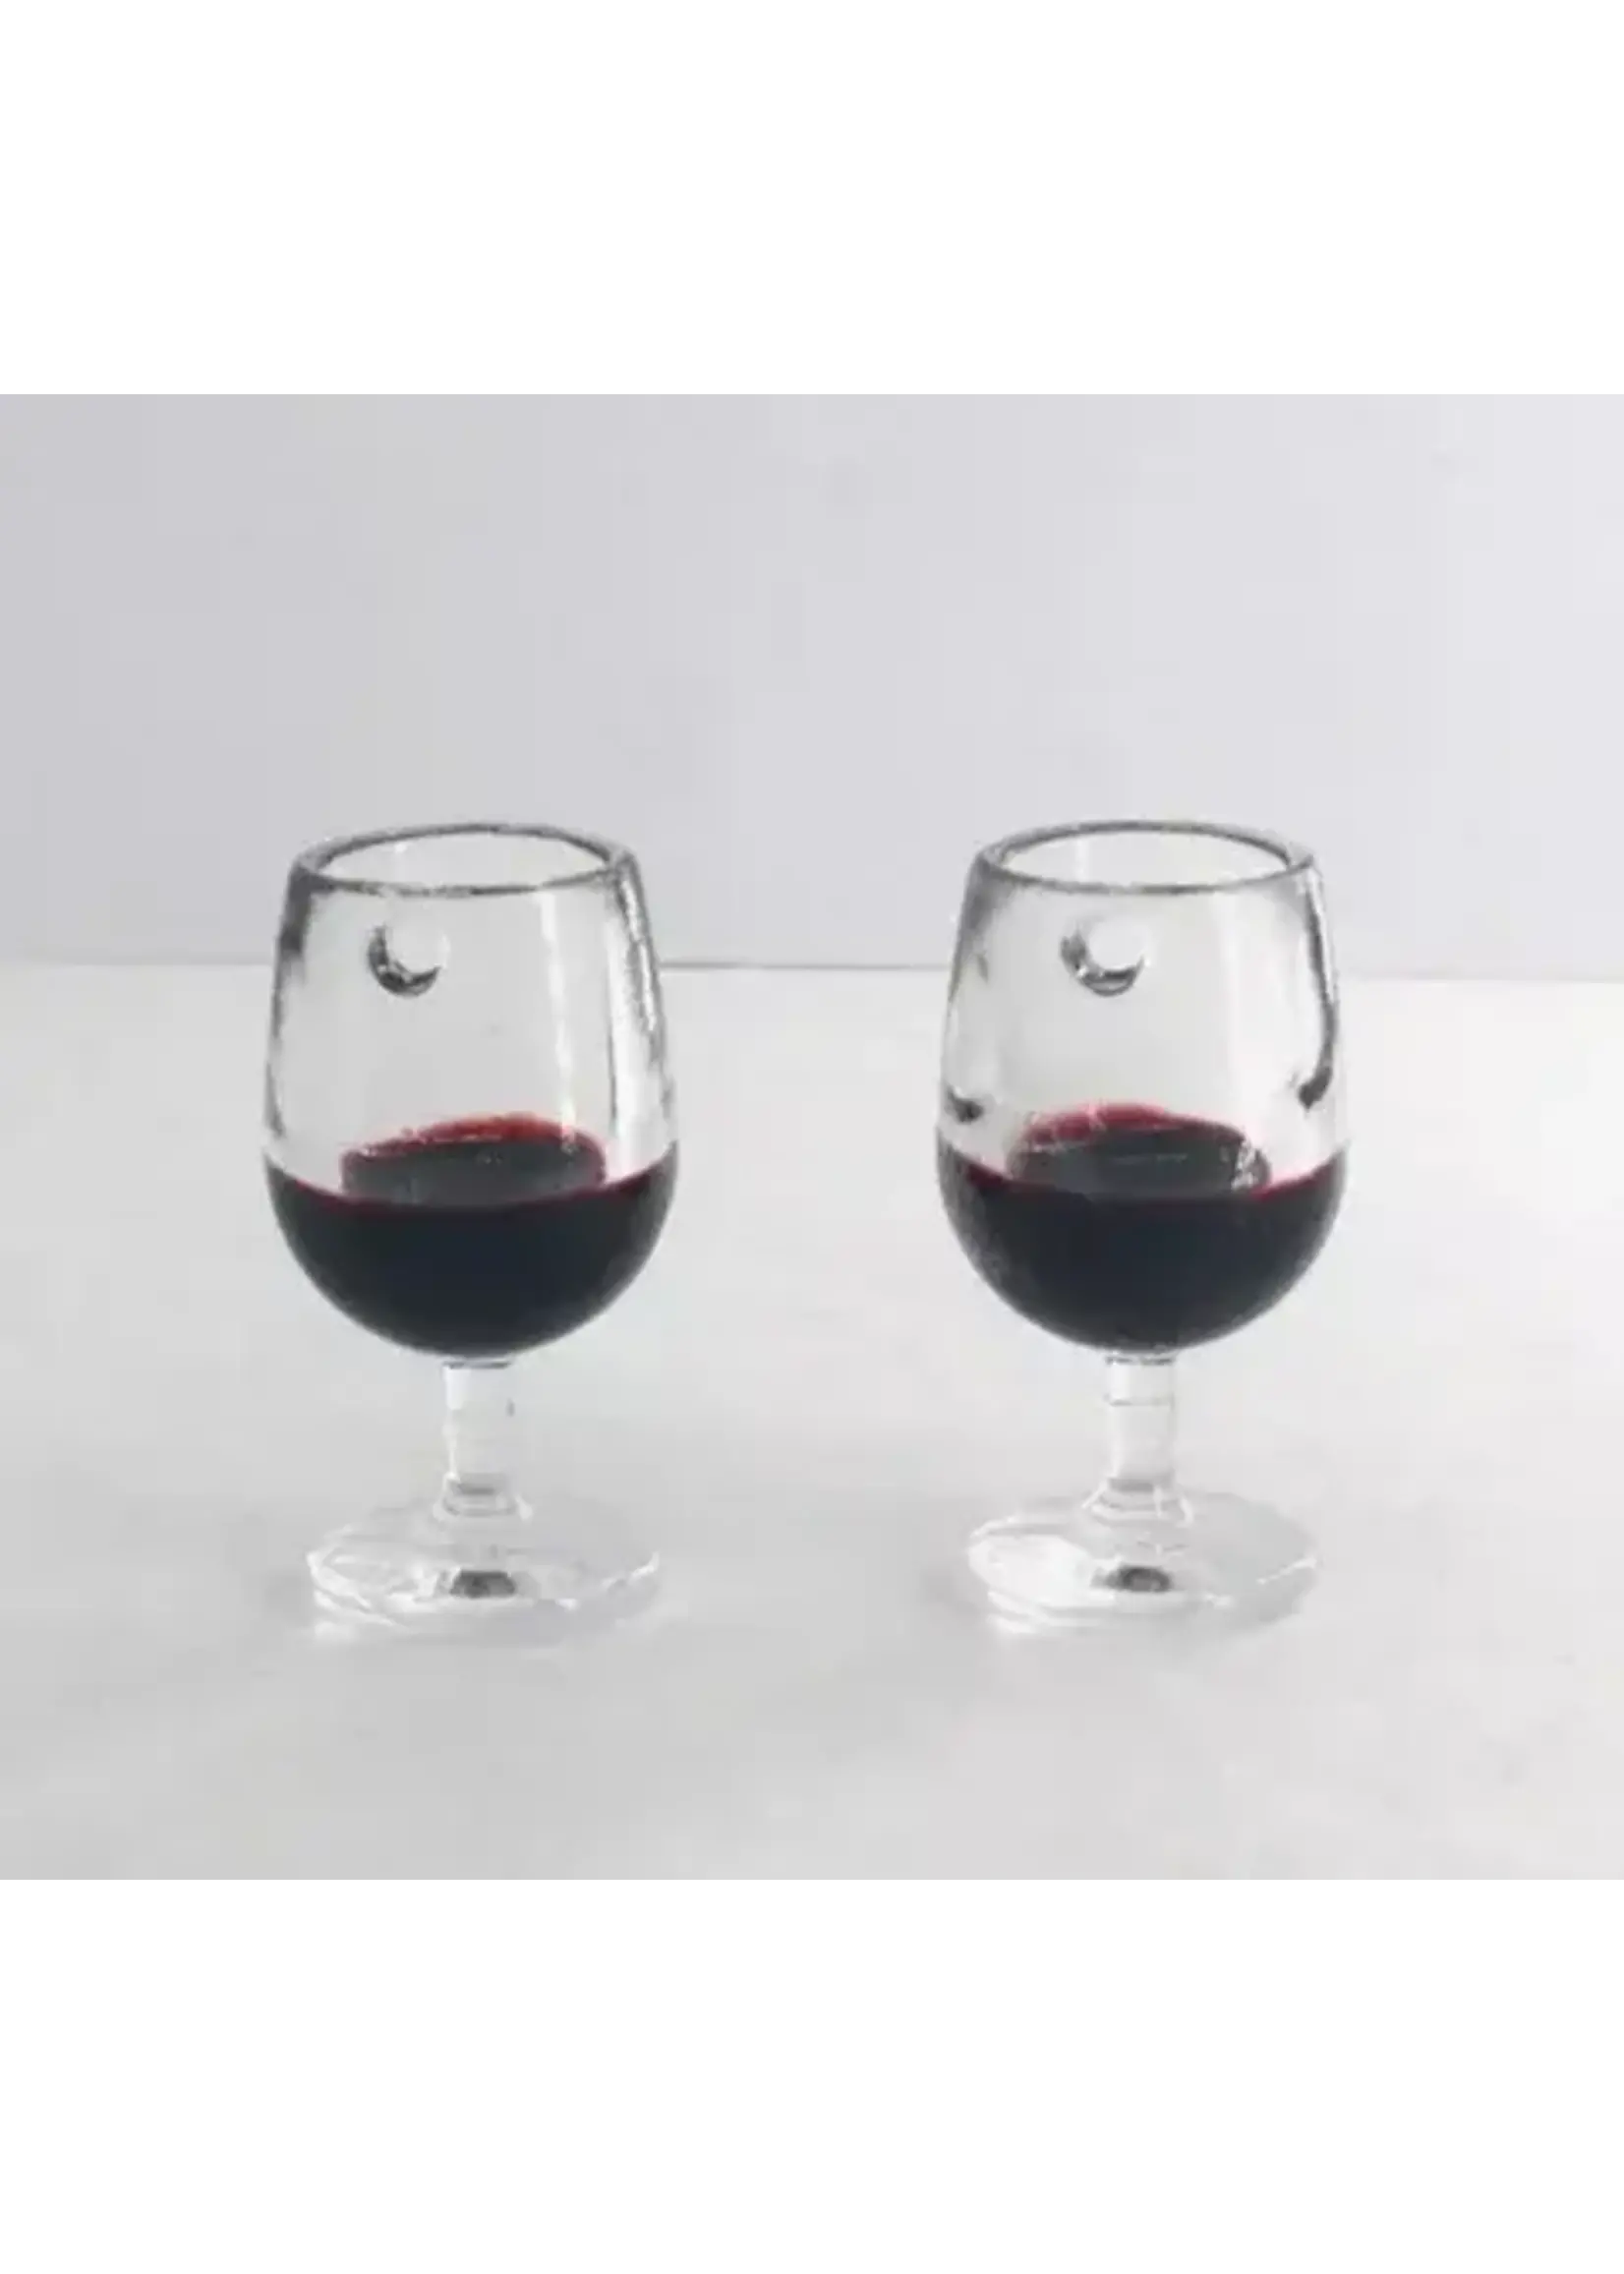 Wijnglas bedel circa 4 cm